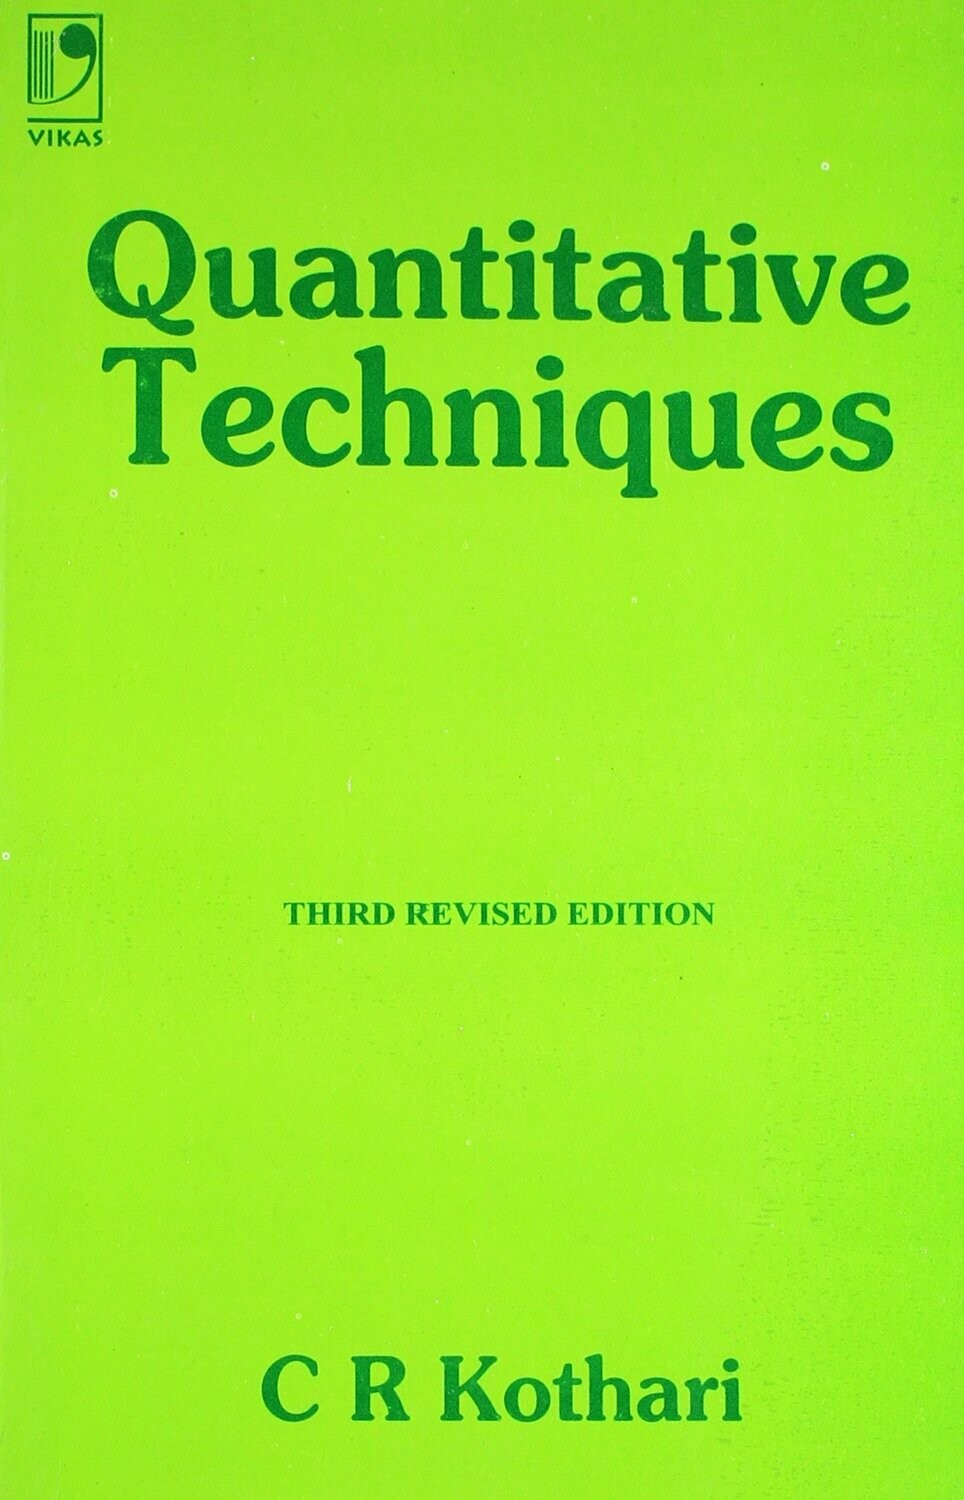 Quantitative Techniques by C R Kothari
Pustakkosh.com